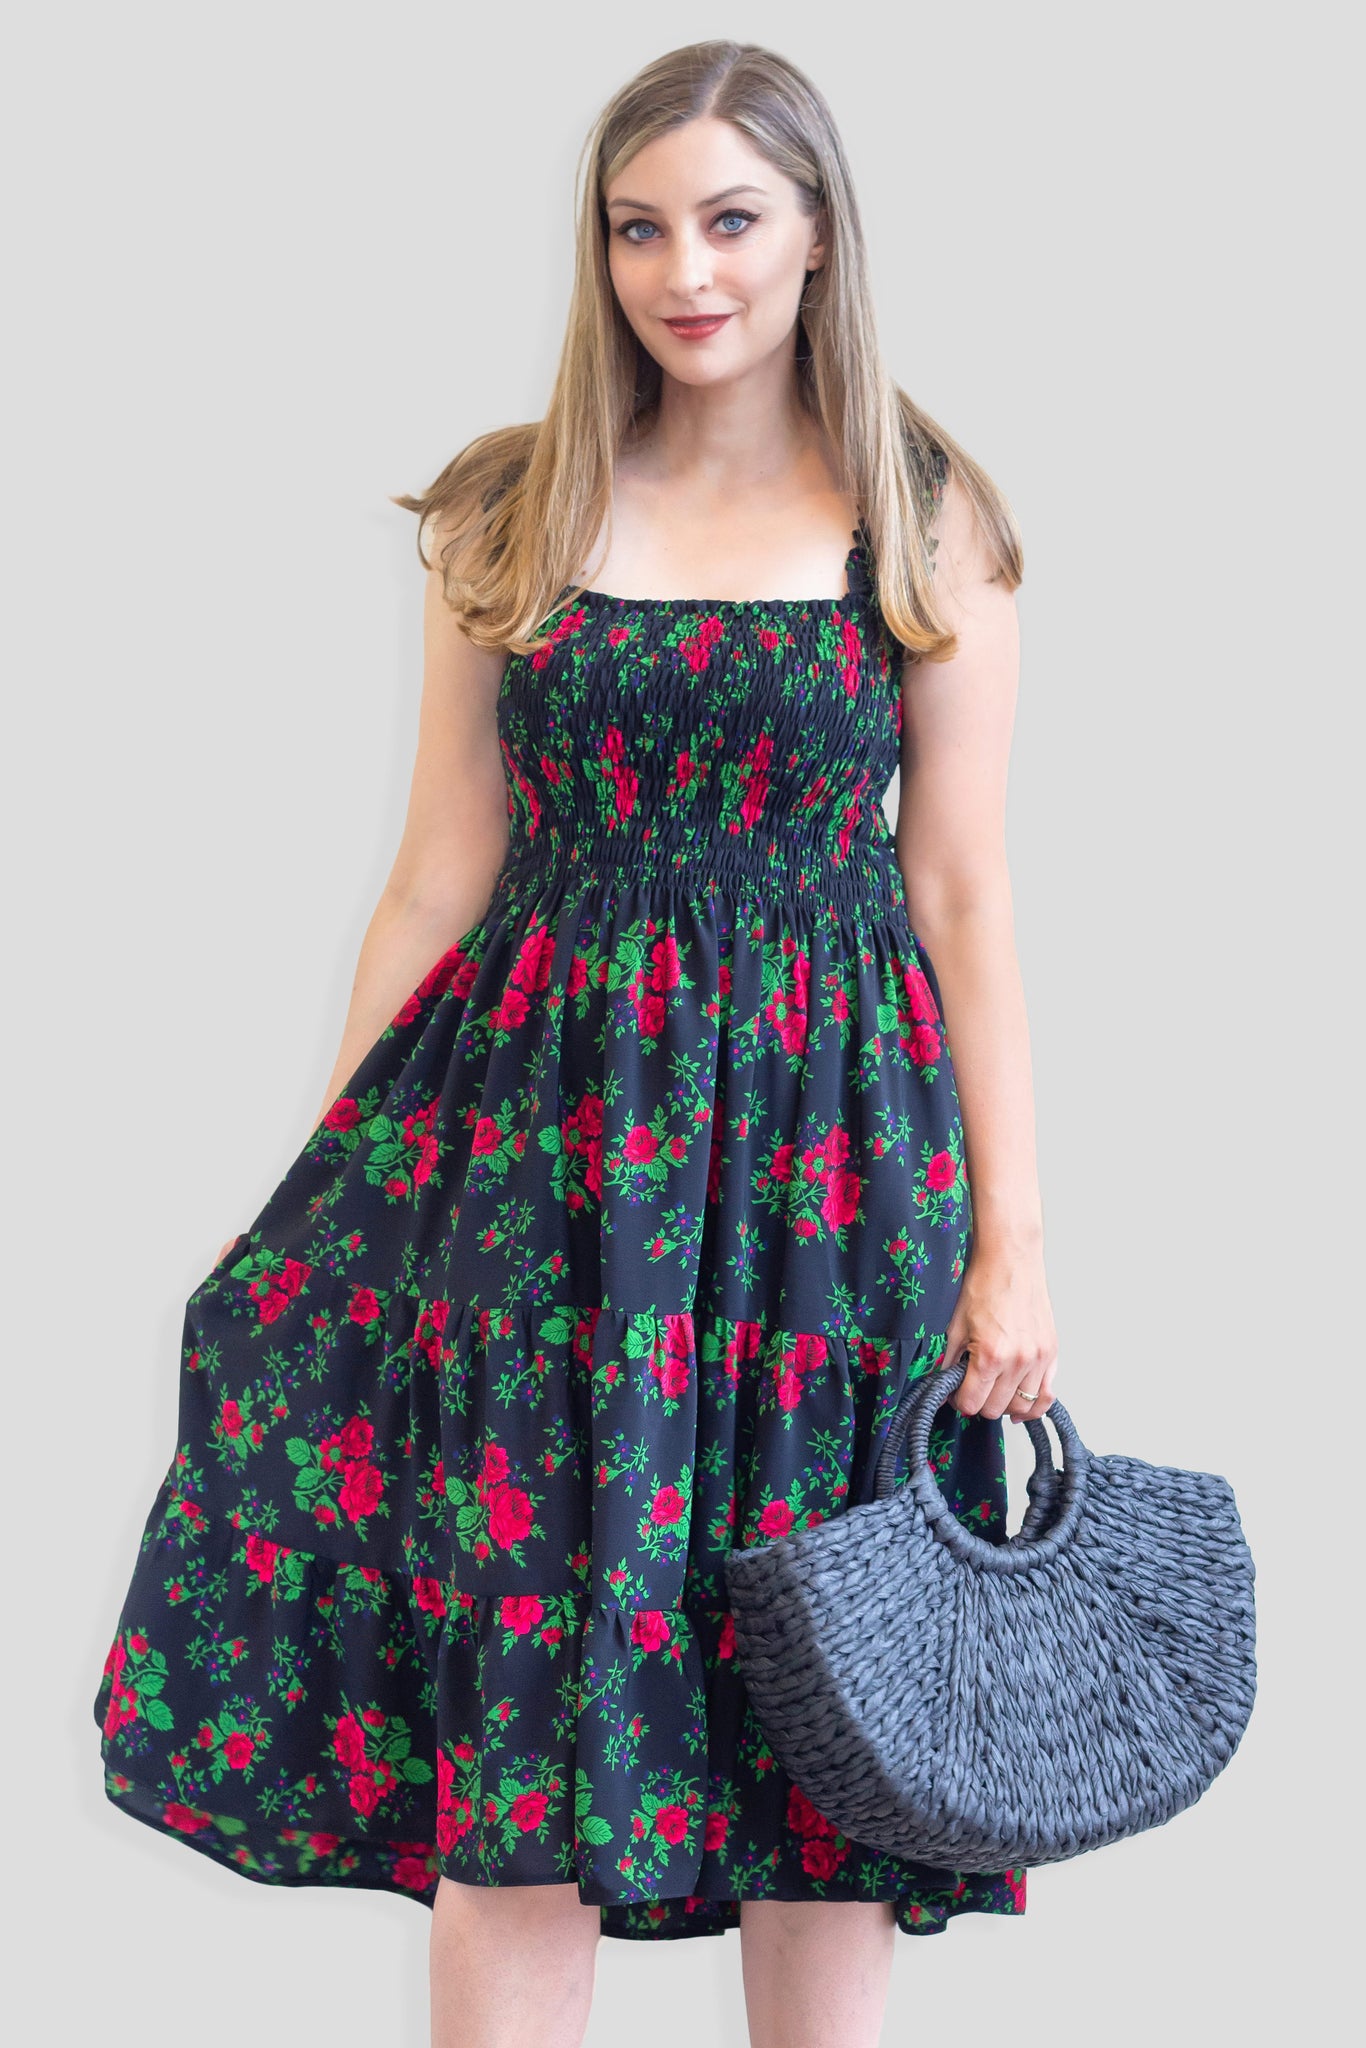 Daniela Black Rose Dress